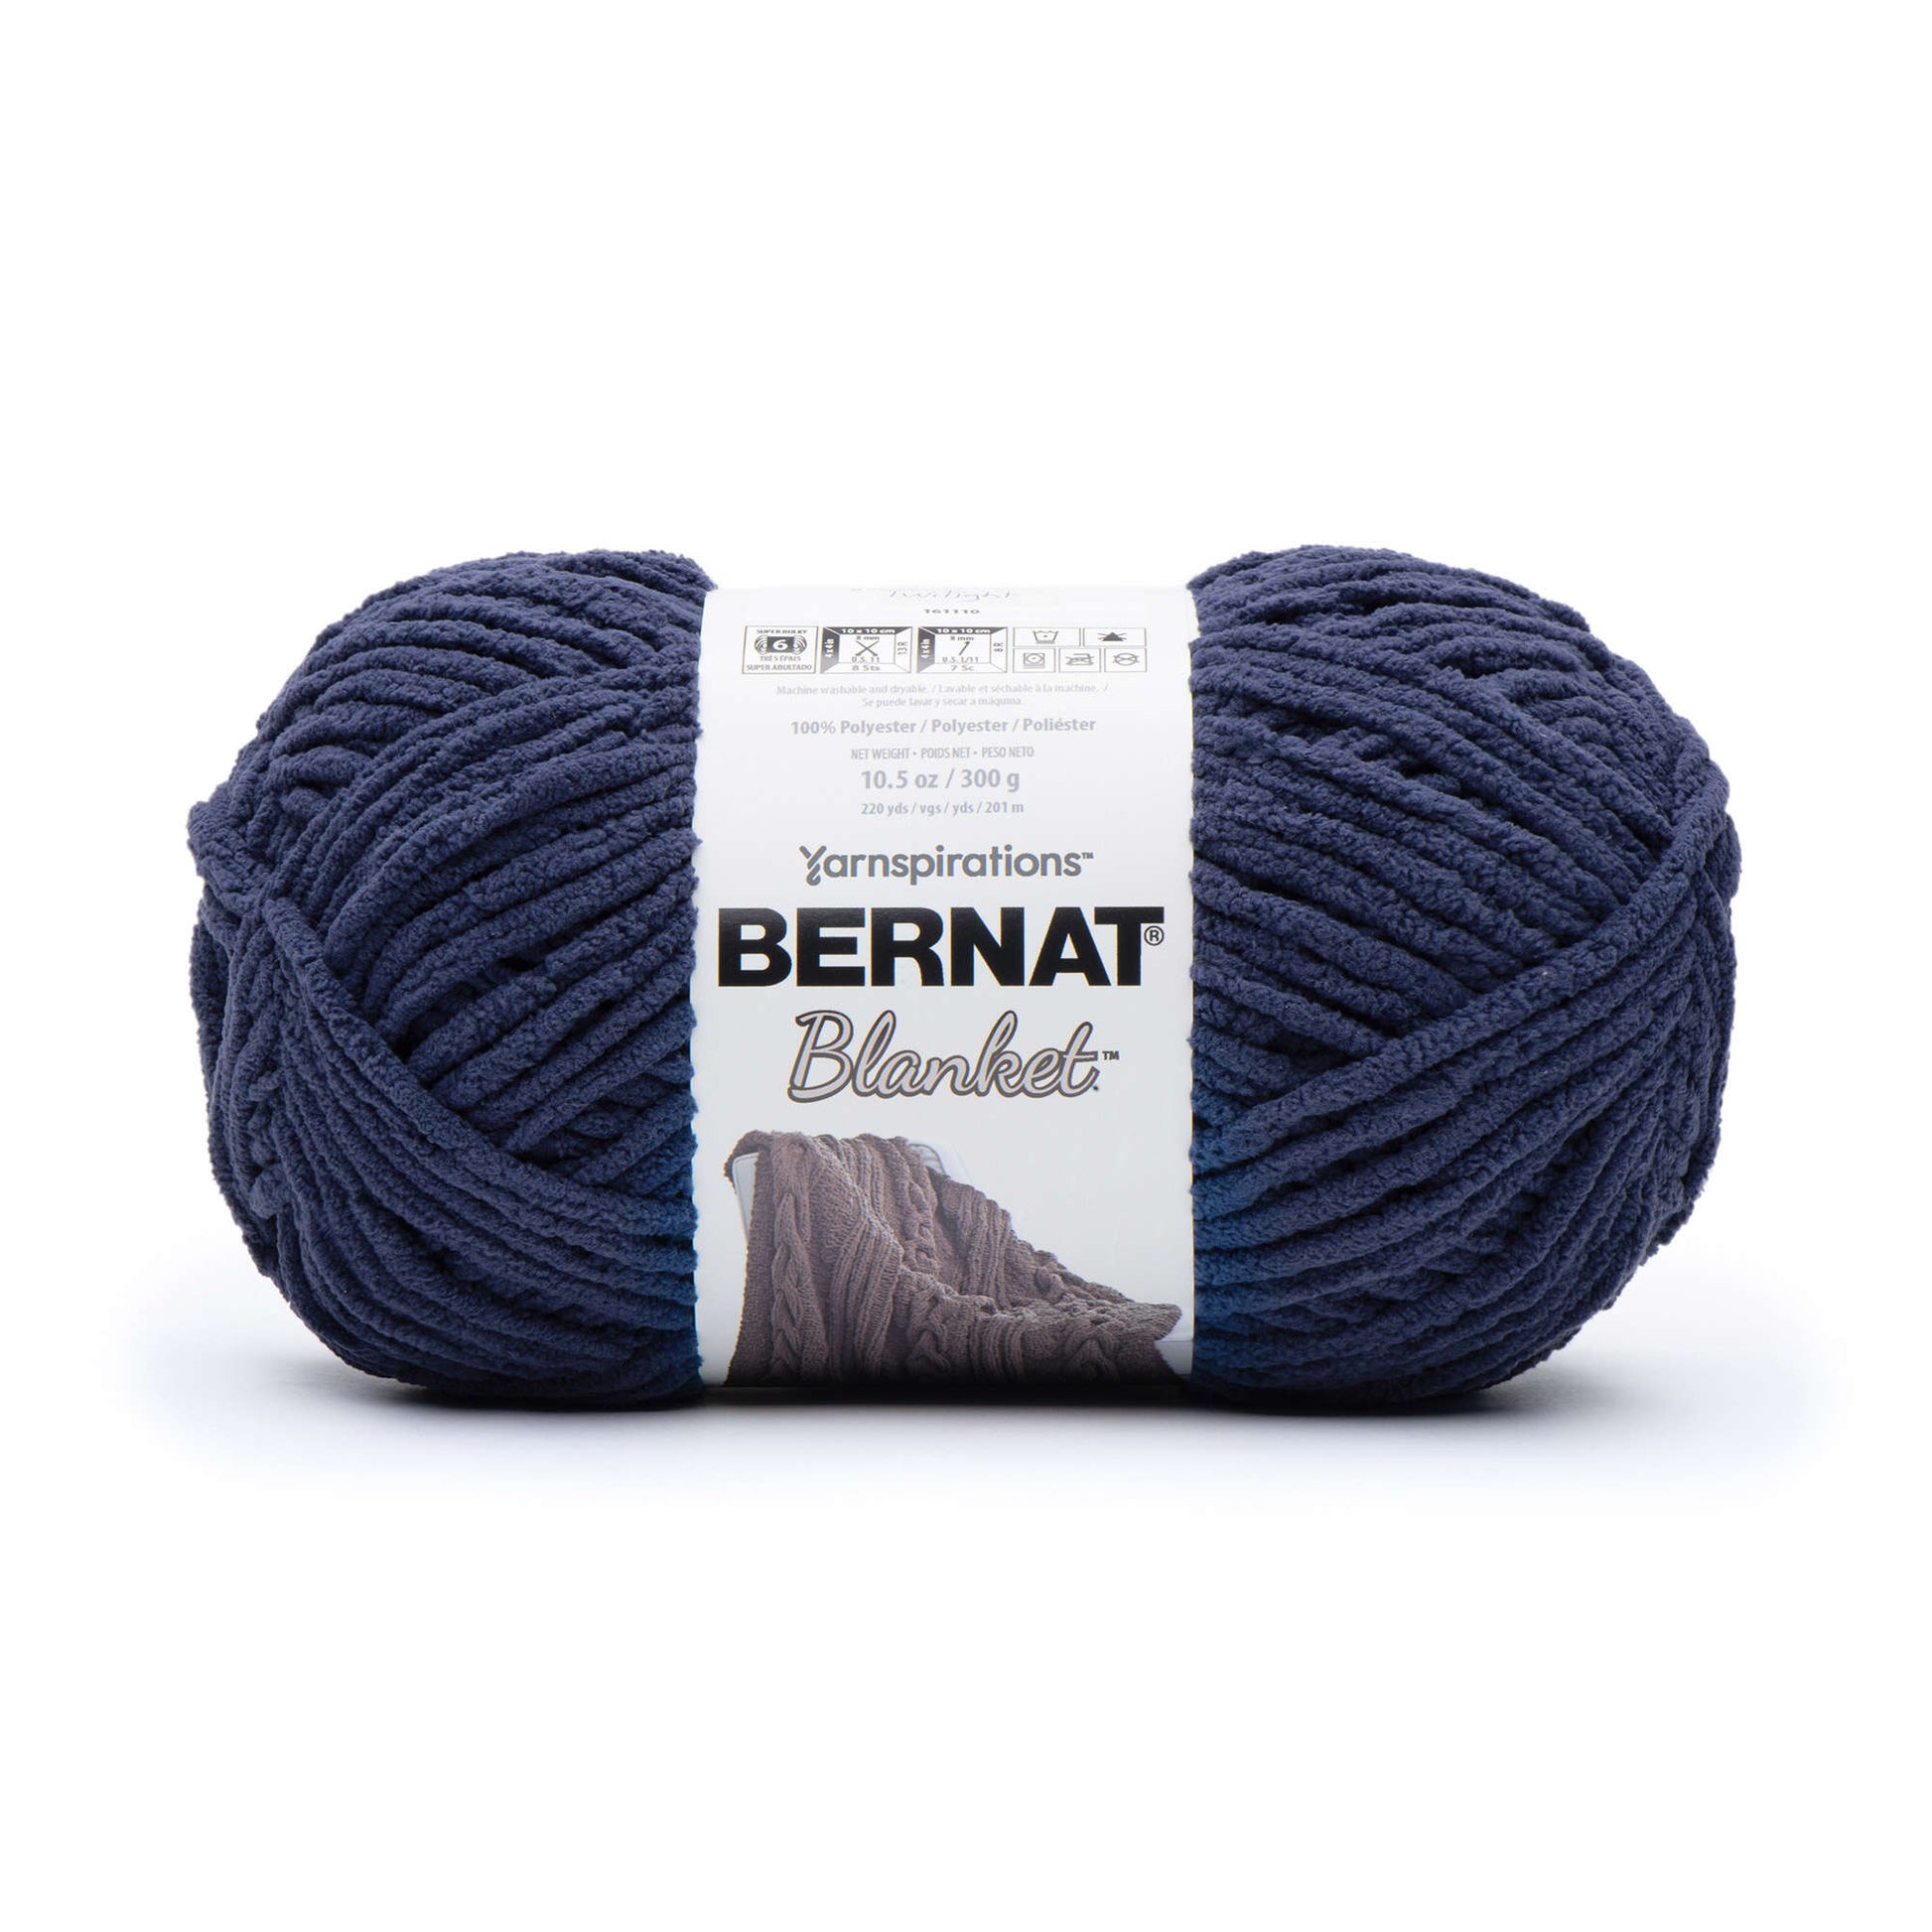 Bernat Blanket Yarn (300g/10.5oz) Twilight